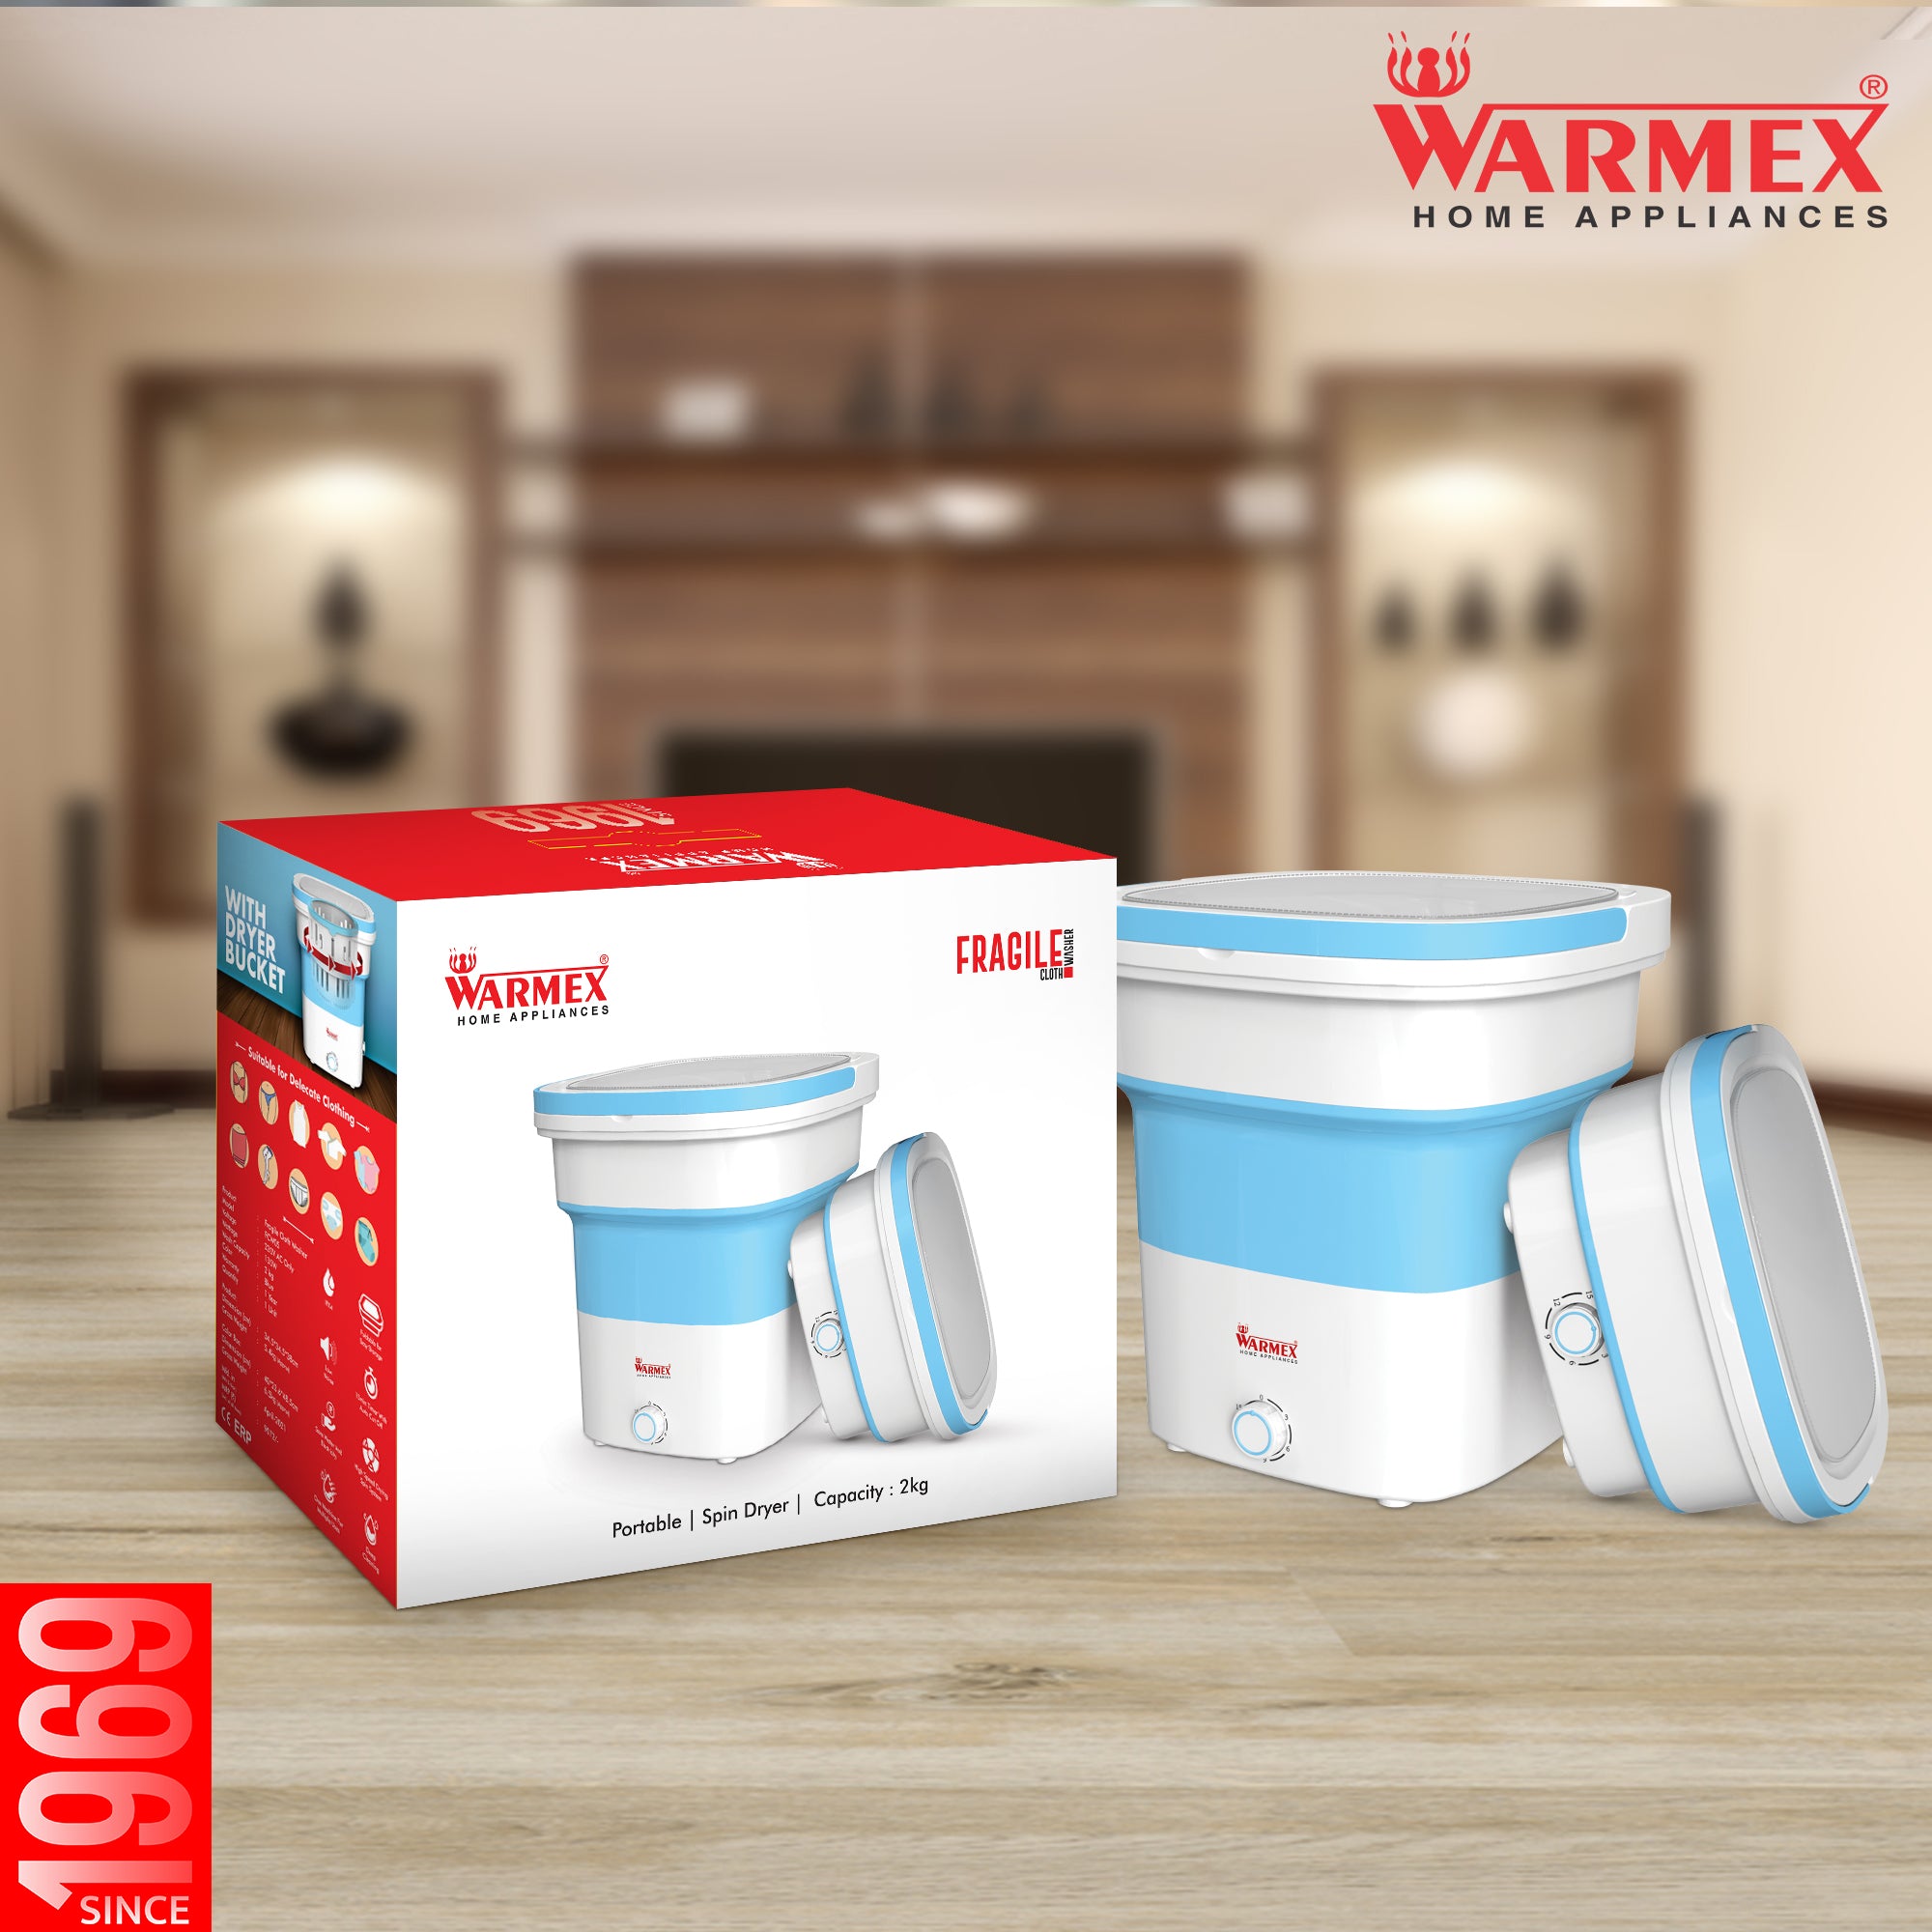 Warmex 135 Watts Fragile Cloth Washer FCW05 with 2 KG Capacity